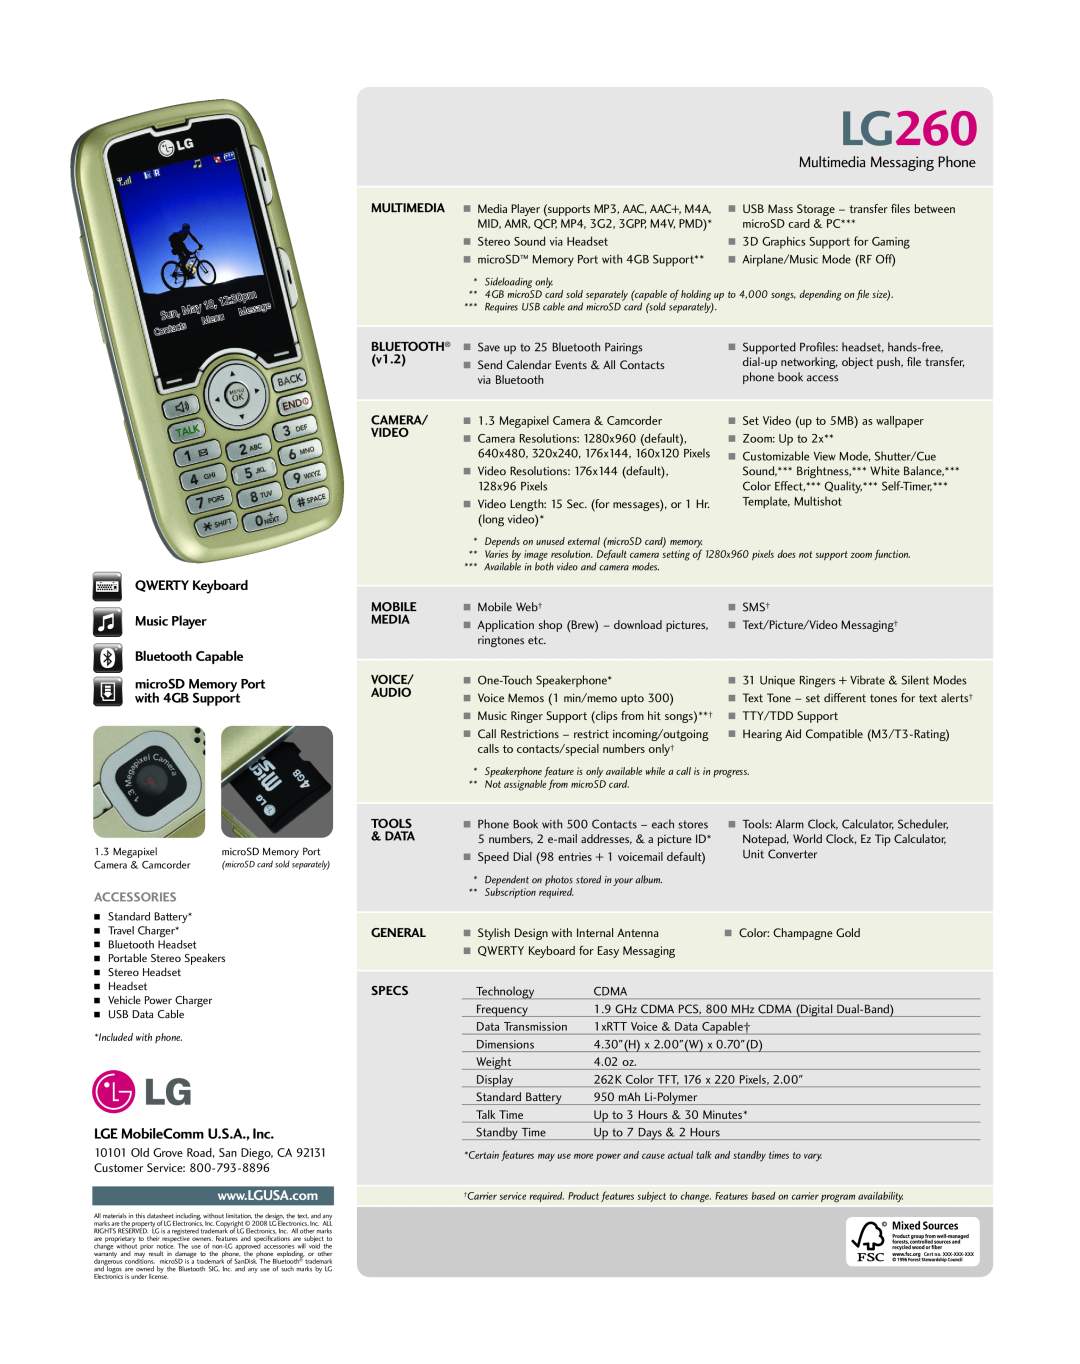 LG Electronics LG260, LGE MobileComm U.S.A., Inc, QWERTY Keyboard Music Player Bluetooth Capable, Accessories, v1.2 